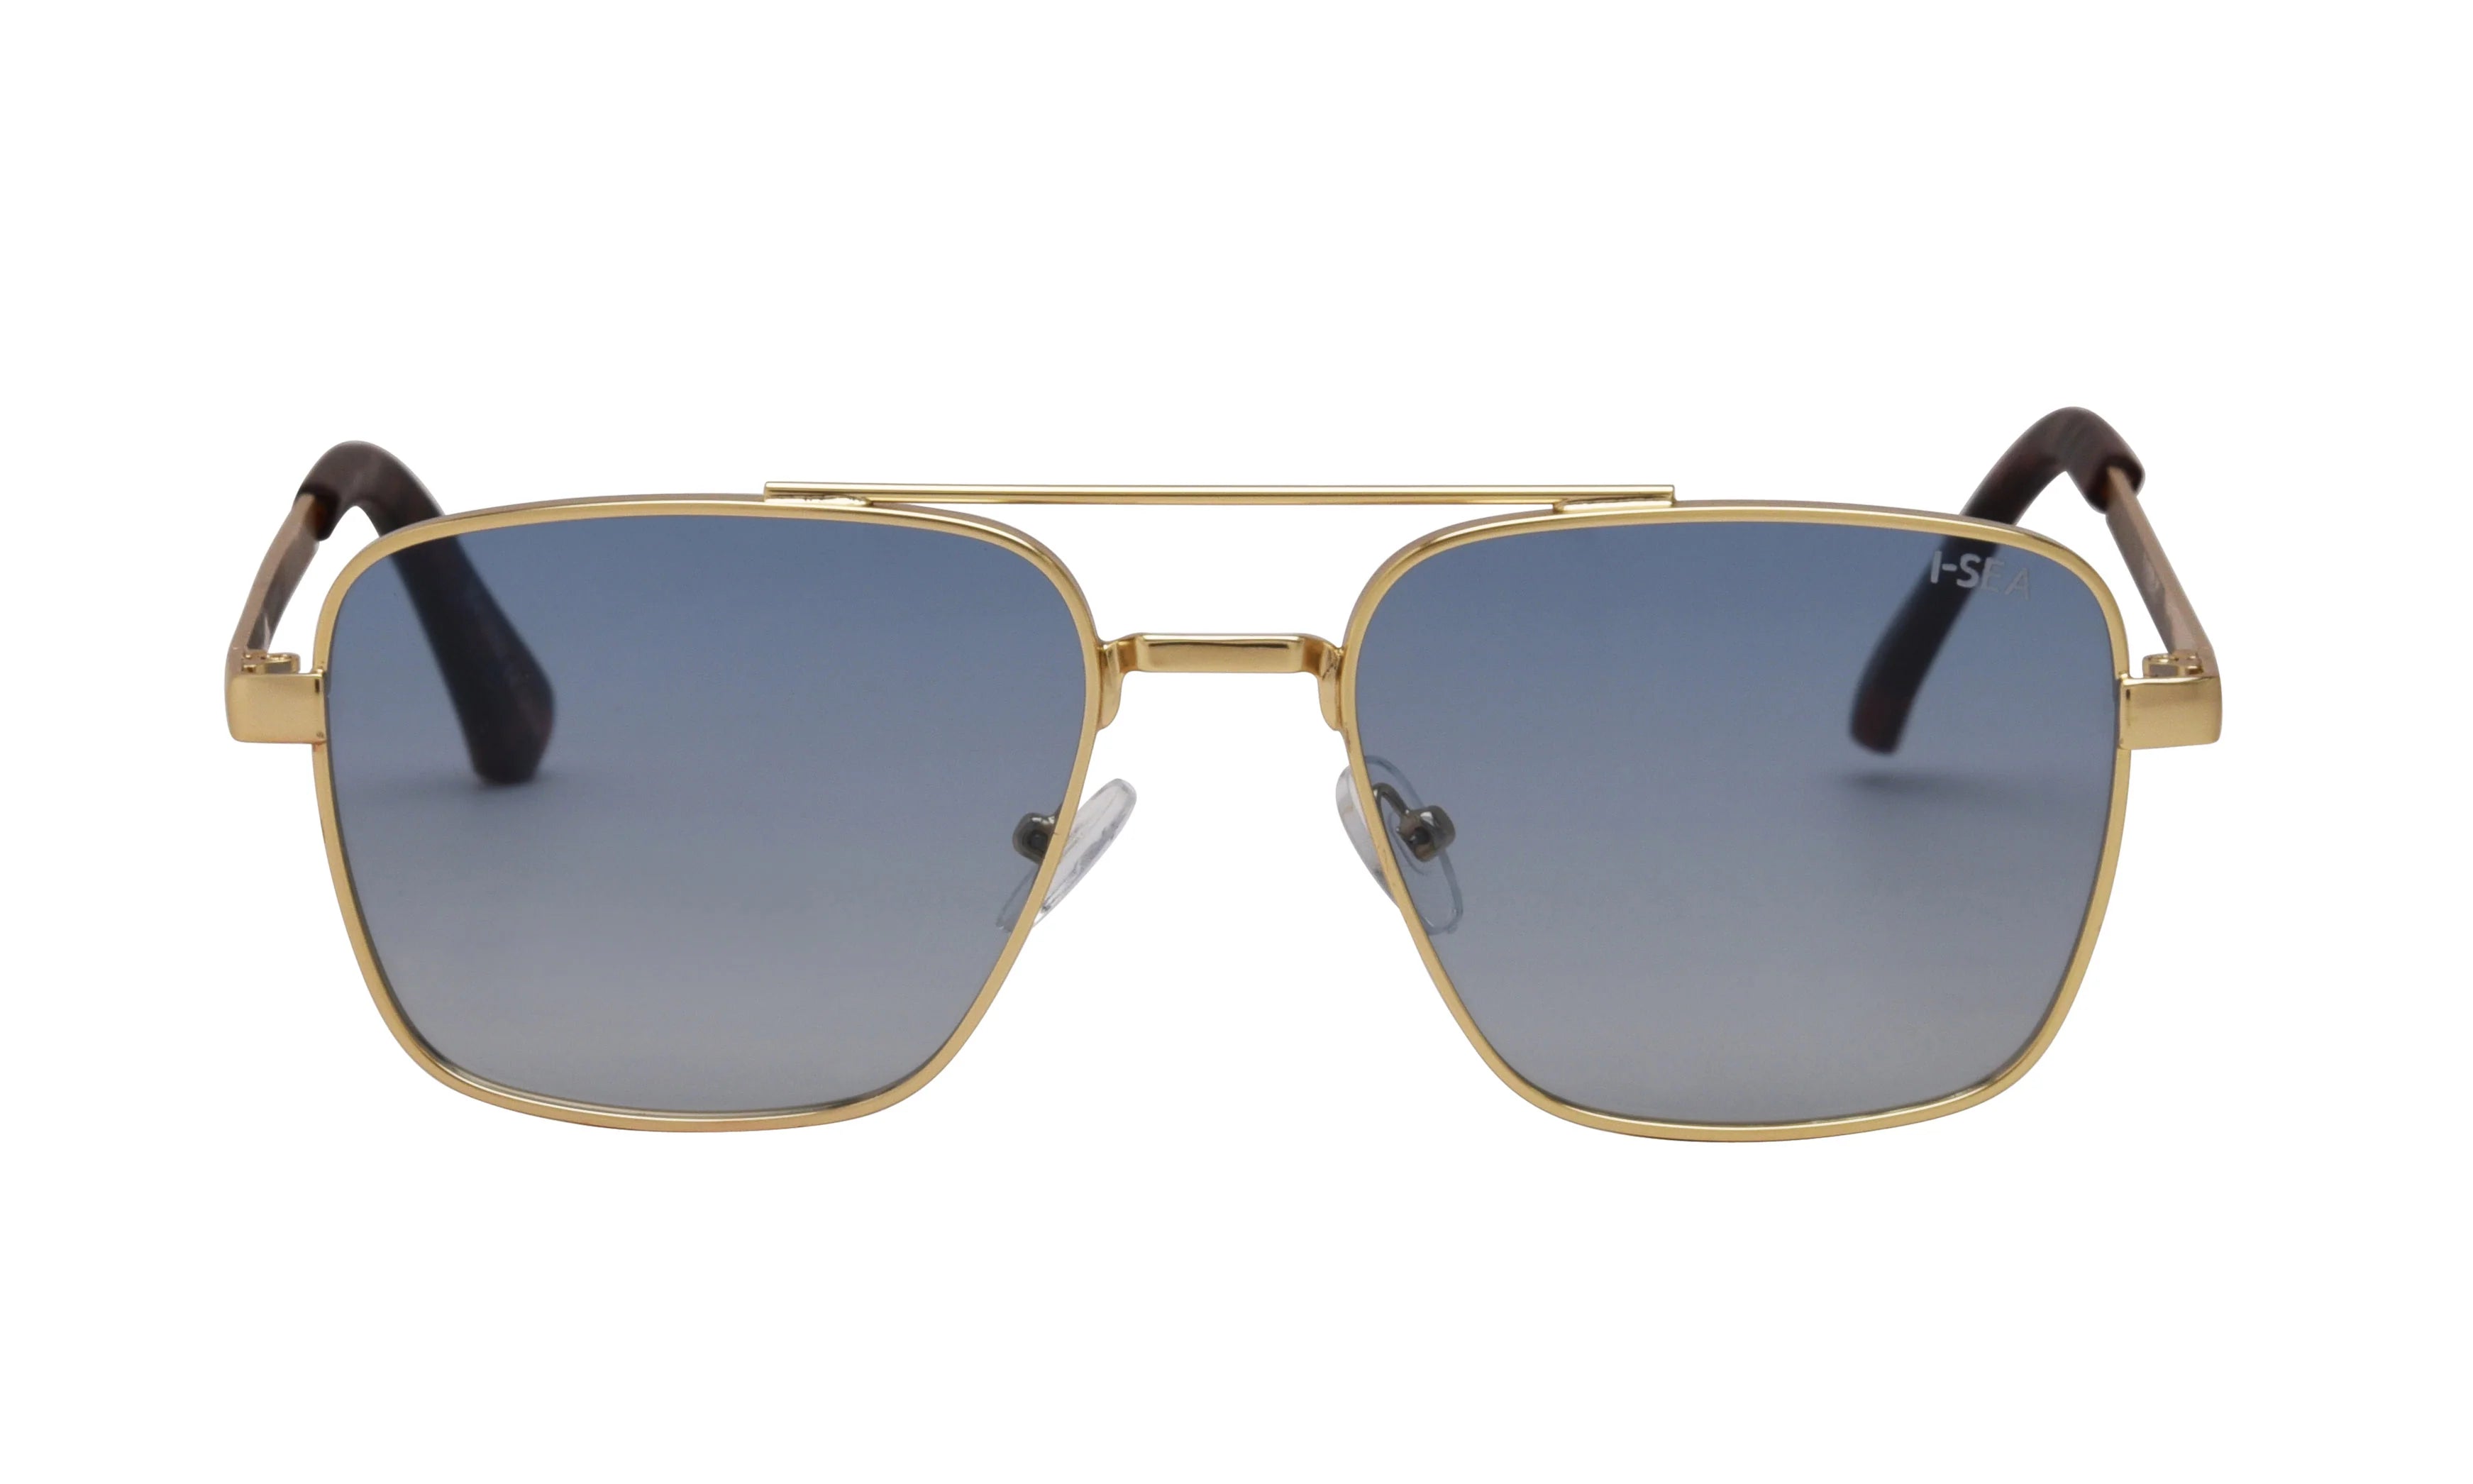 Sunglasses- Brooks - Gold/Blue Lens